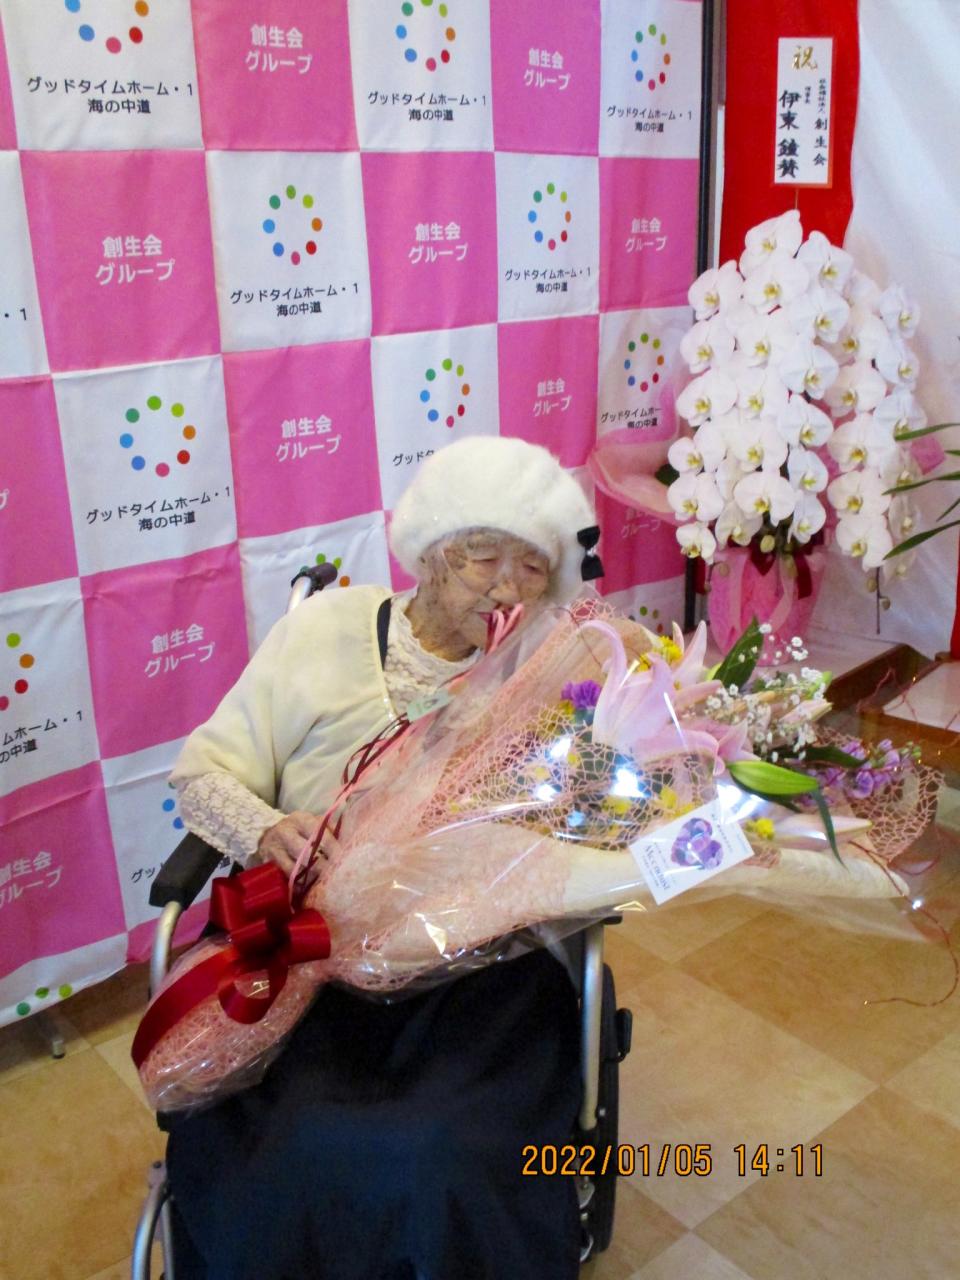 World’s oldest living person Kane Tanaka turned 119 this month. (Photo: Twitter/tanakakane0102)